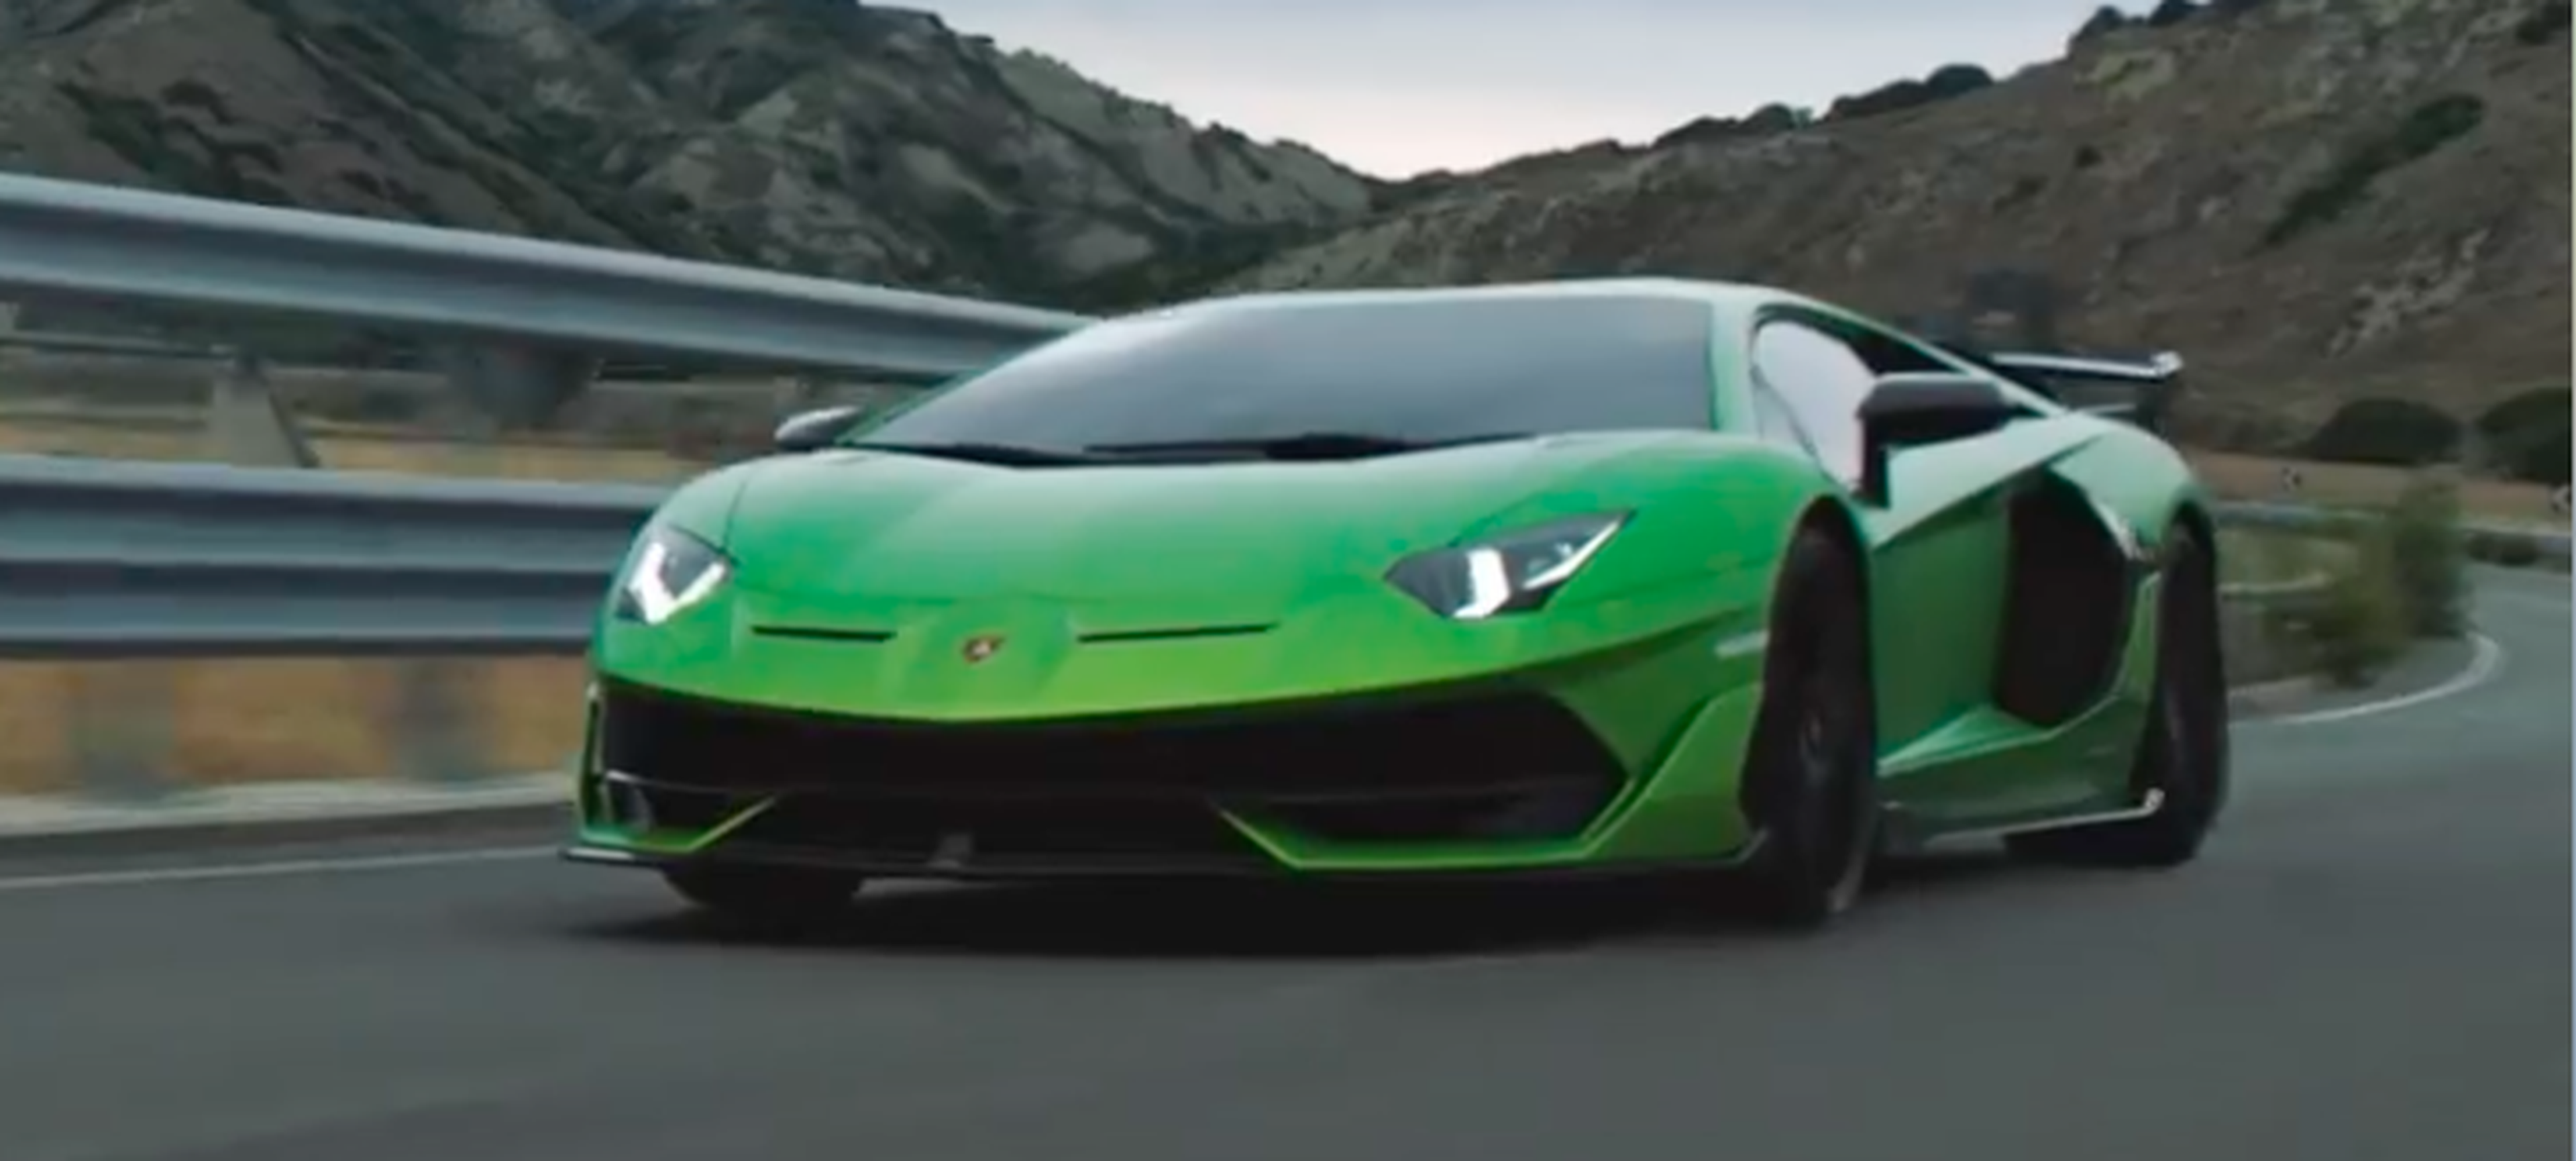 VÍDEO: Lamborghini Aventador SVJ, 770 CV de sensaciones puras